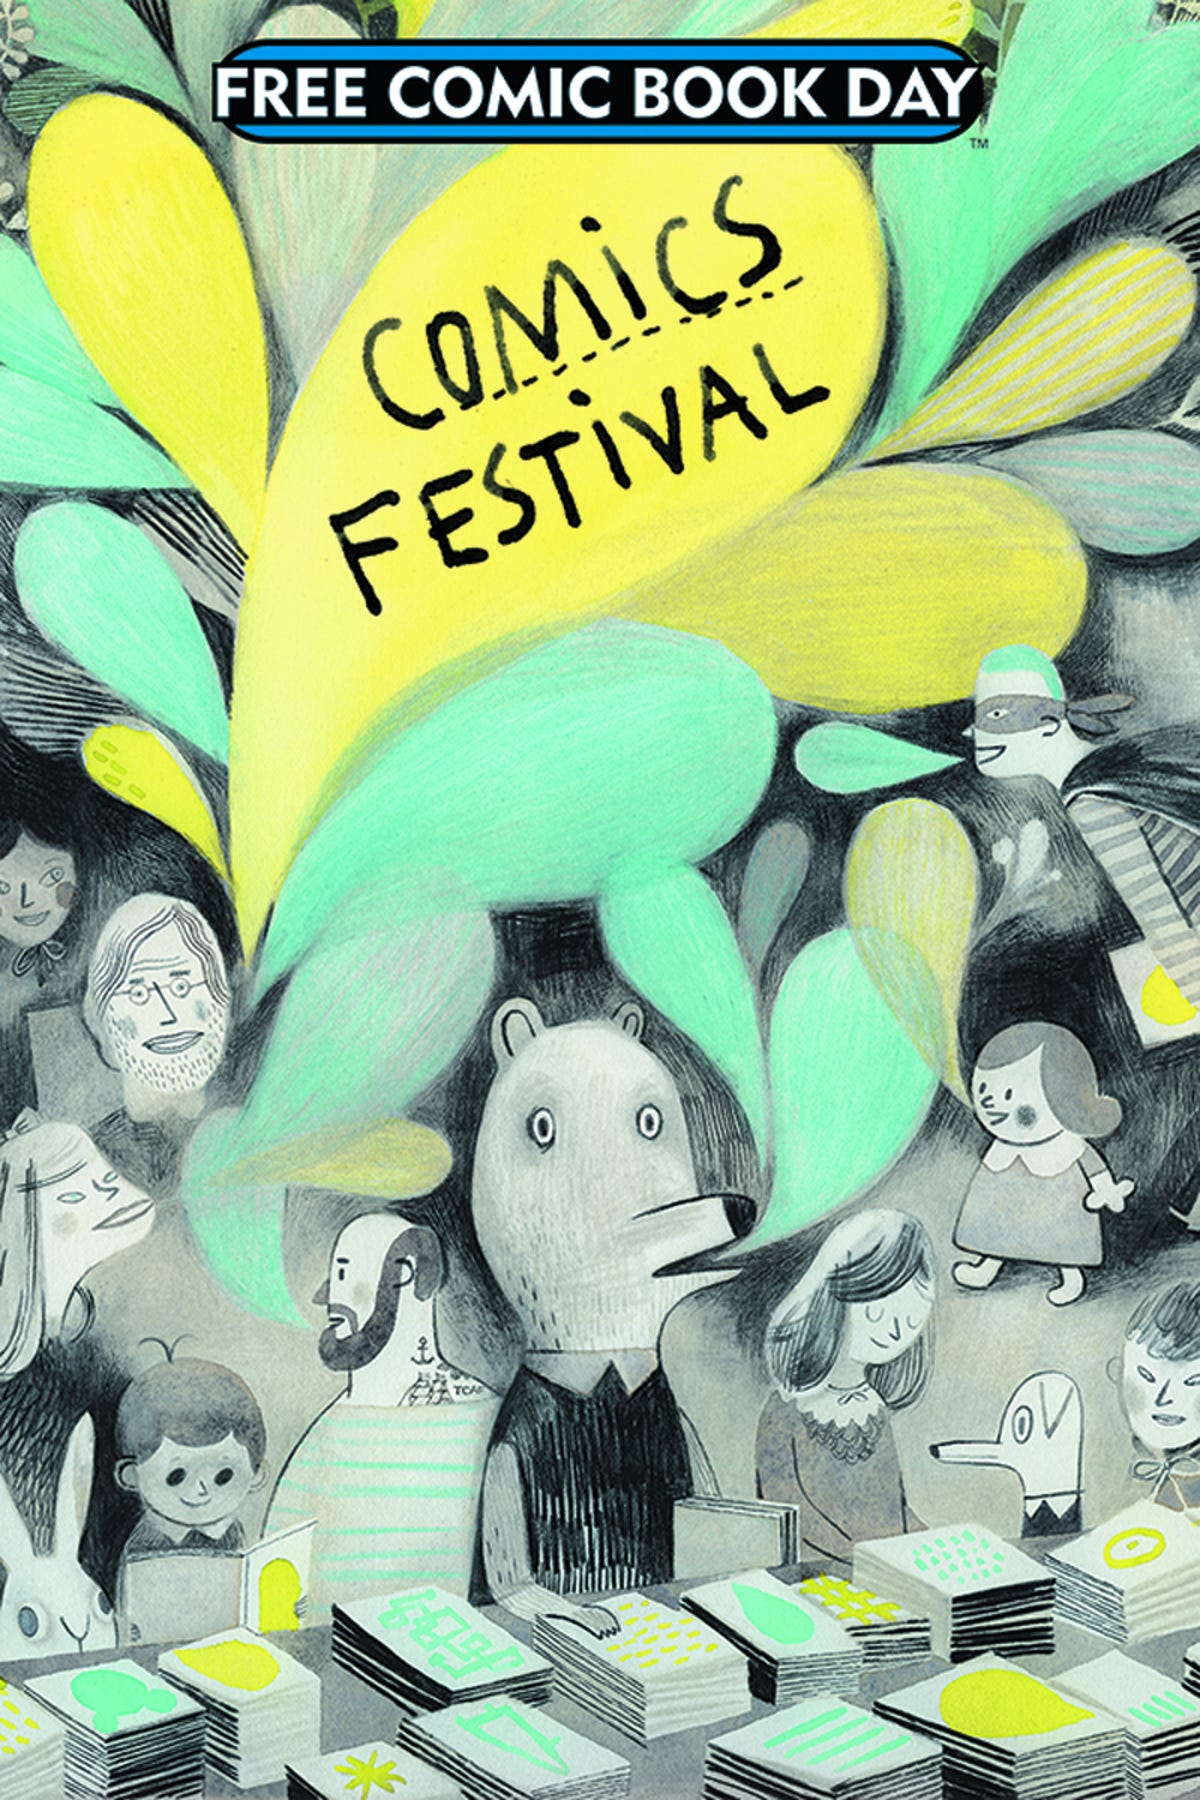 jan150019-fcbd-2015-comics-festival-net.jpg